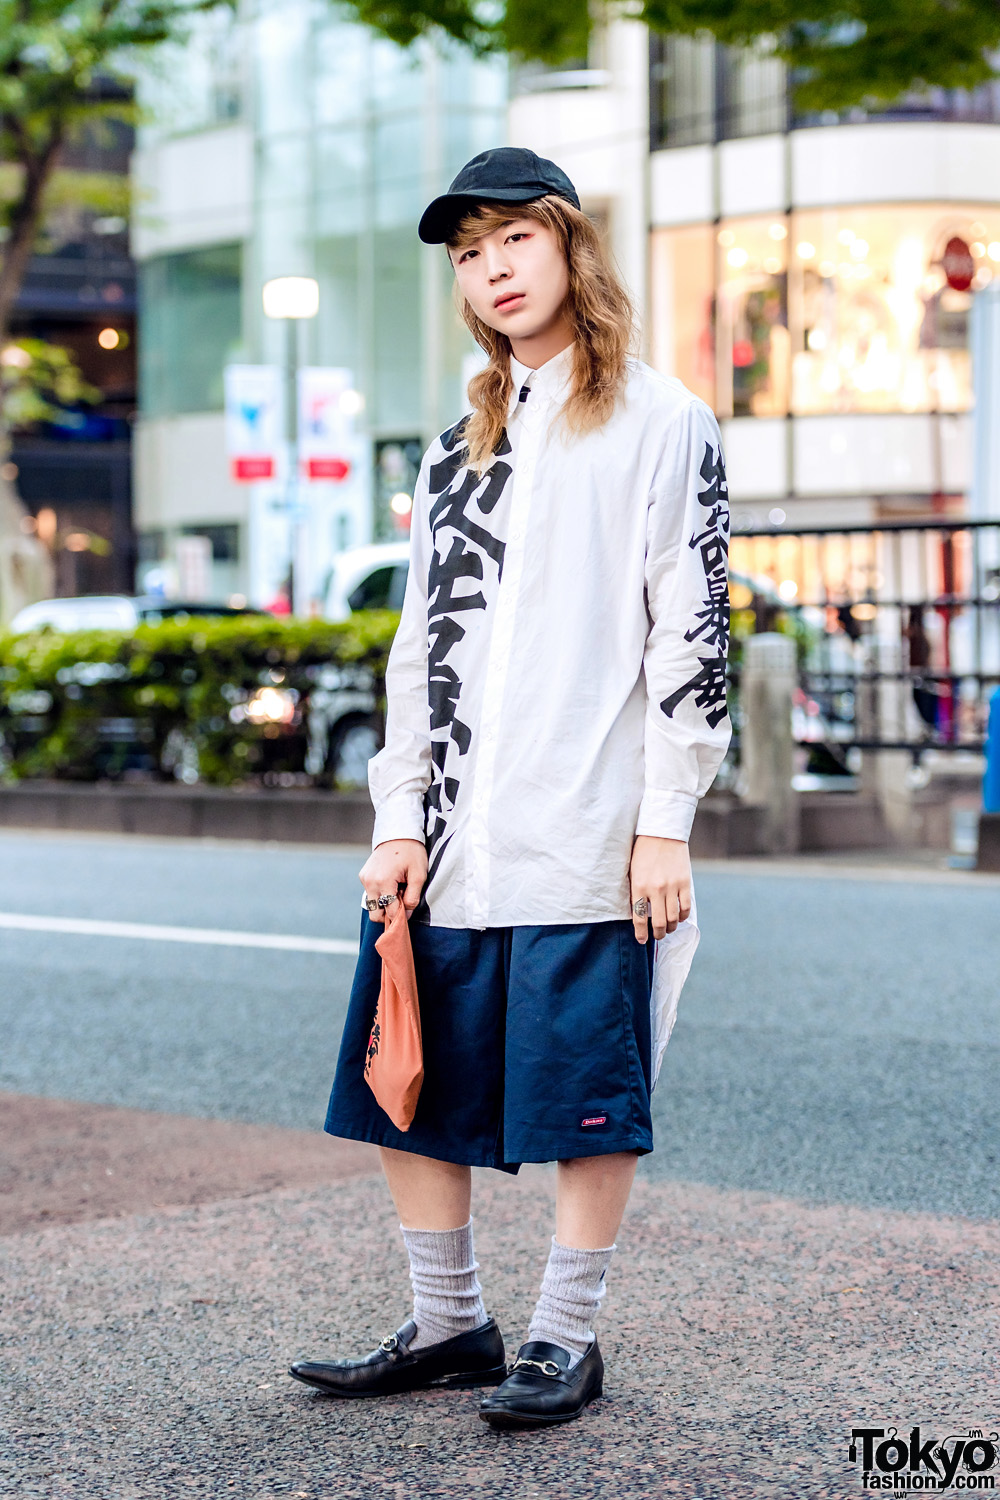 Fashion College Student in Monochrome Streetwear w/ Kansai Yamamoto Kanji Print Shirt, Dickies Shorts, Leather Loafers, Cap & Wristlet